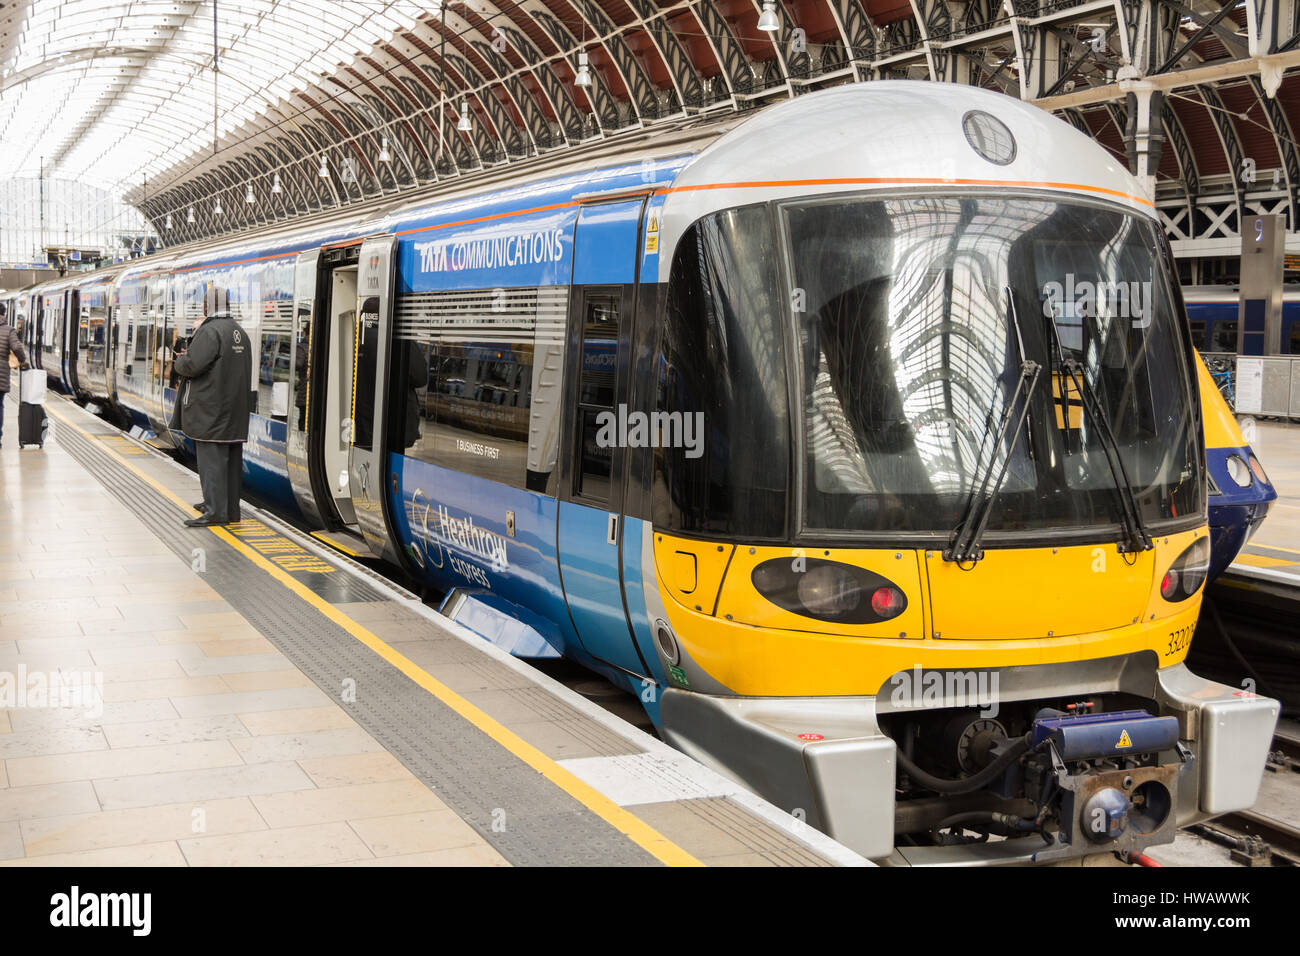 Tata Communications Heathrow Express-Zug am Bahnhof Paddington, London, UK Stockfoto